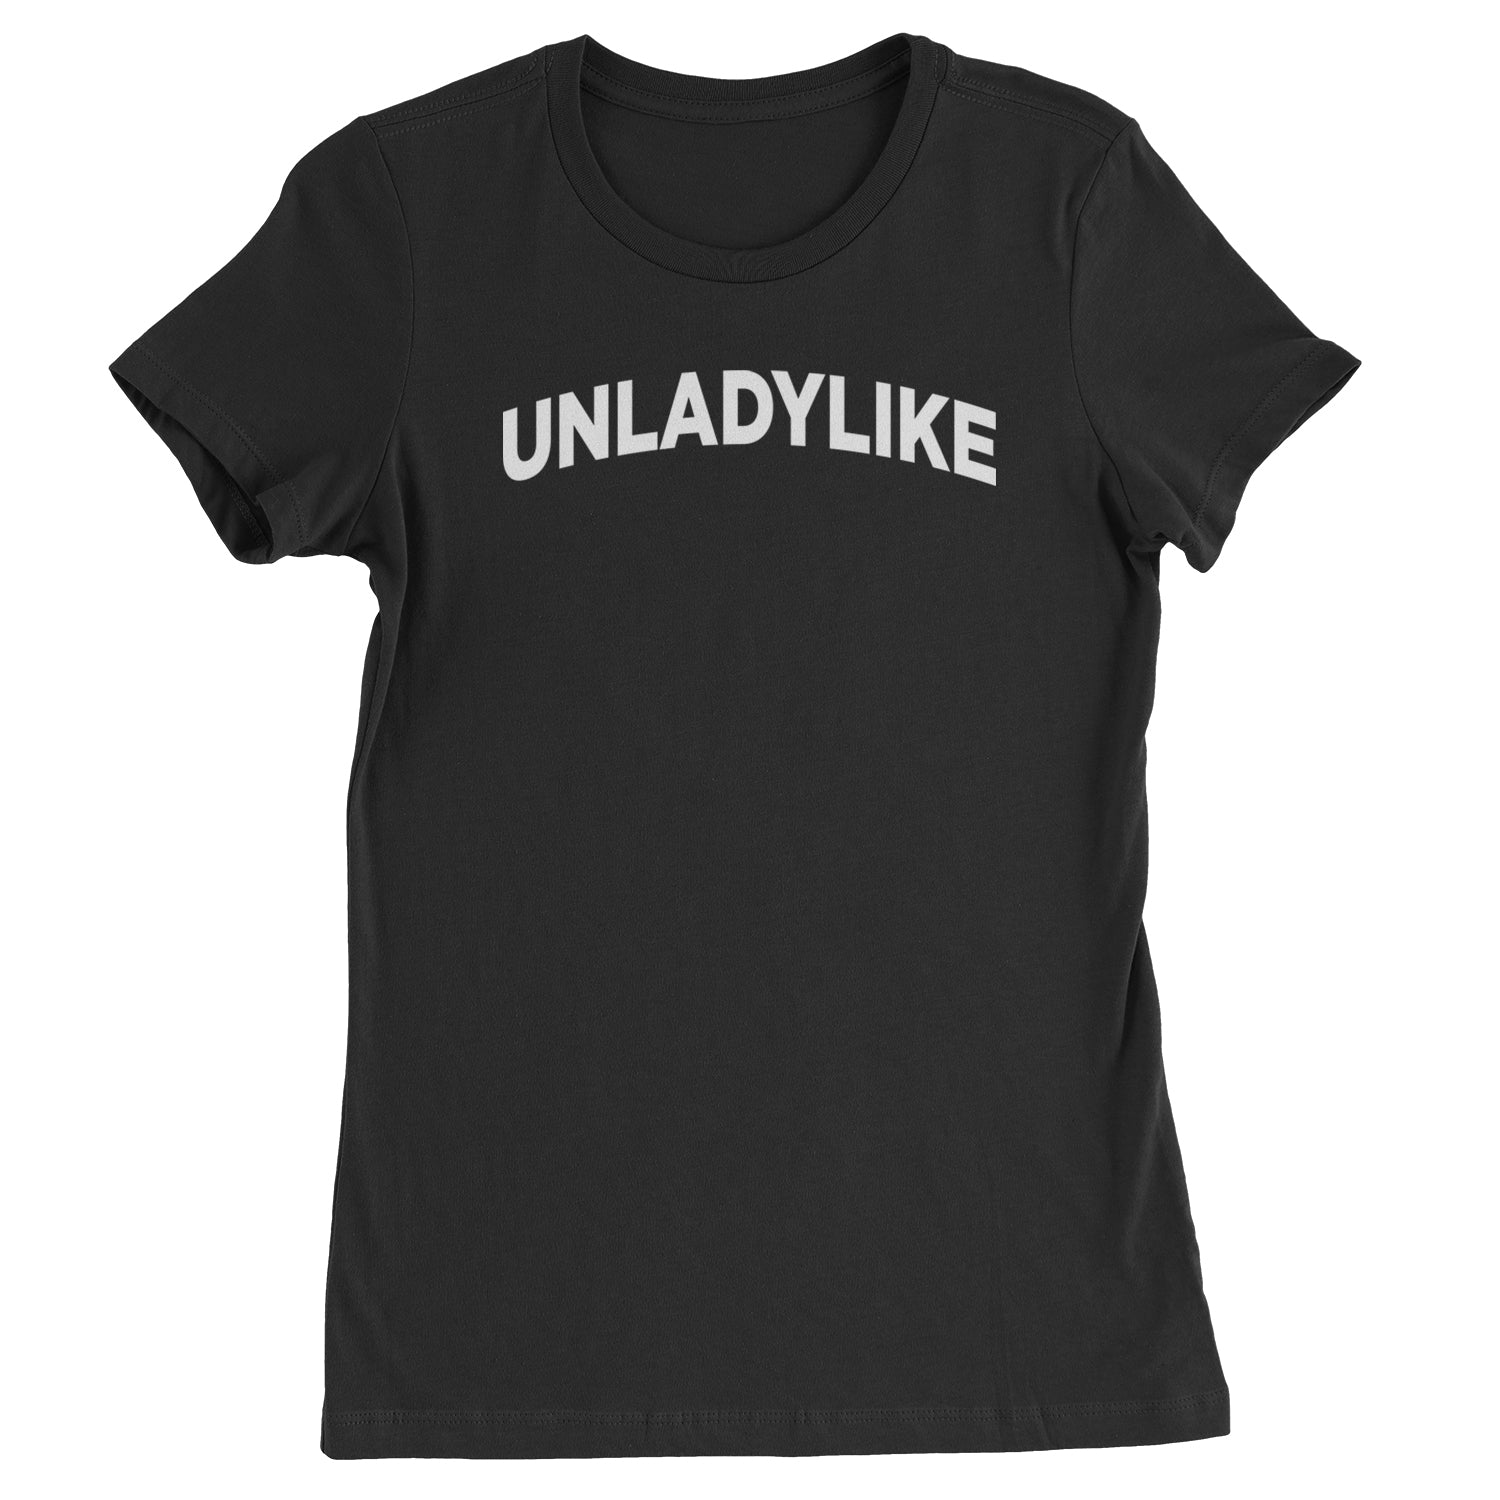 Unladylike Embrace Your Unique Strength Womens T-shirt